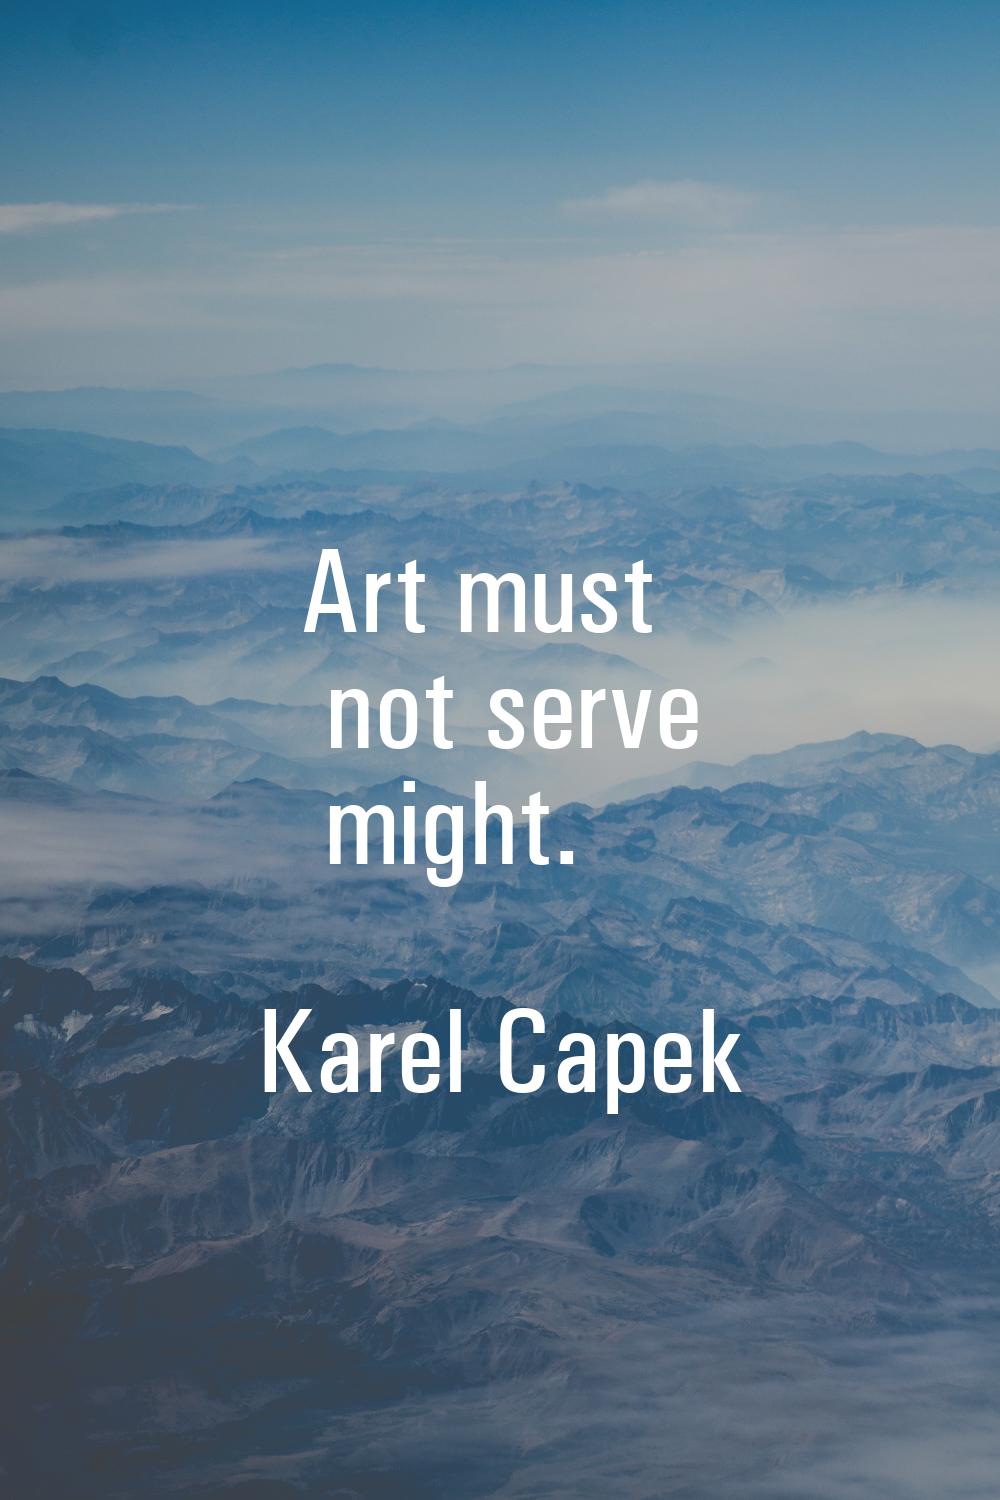 Art must not serve might.